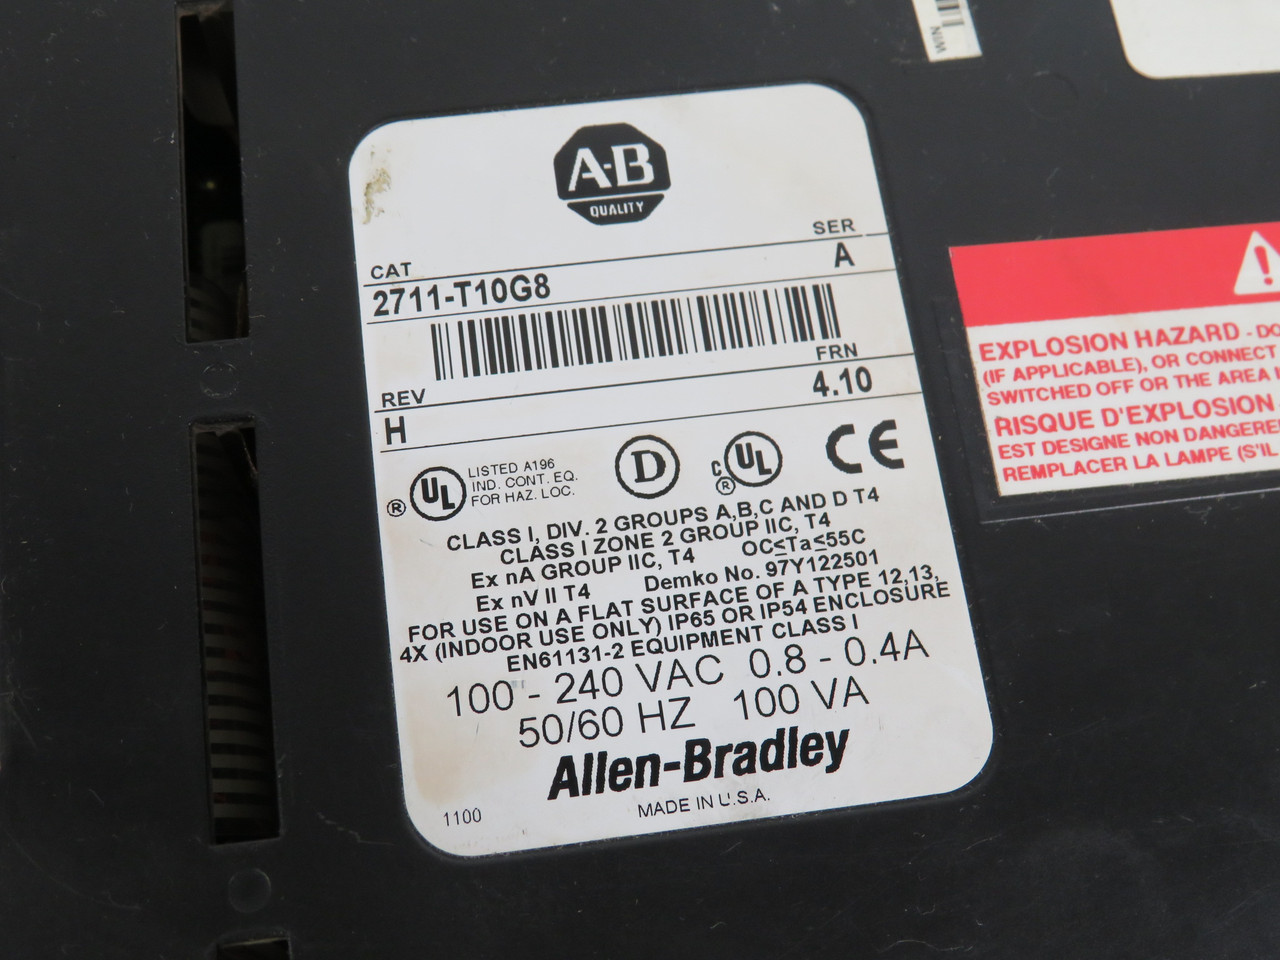 Allen-Bradley 2711-T10G8 Panelview 1000 Operator Panel Ser A FRN 4.10 AS IS